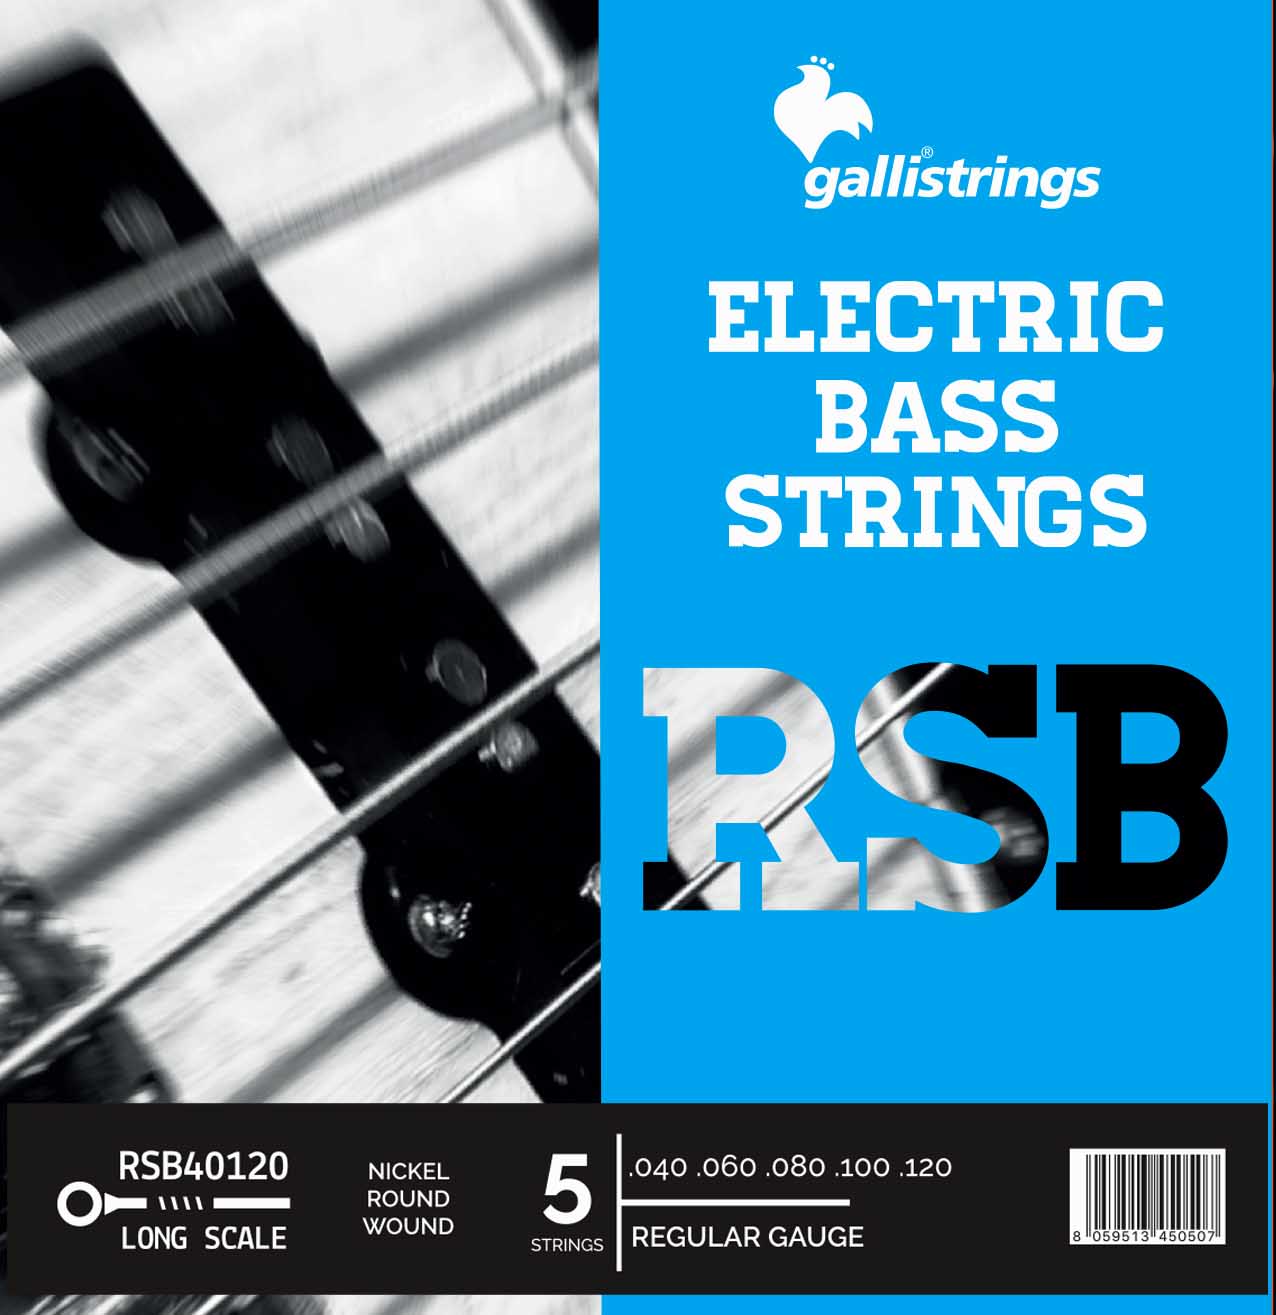 RSB40120 5 strings Regular